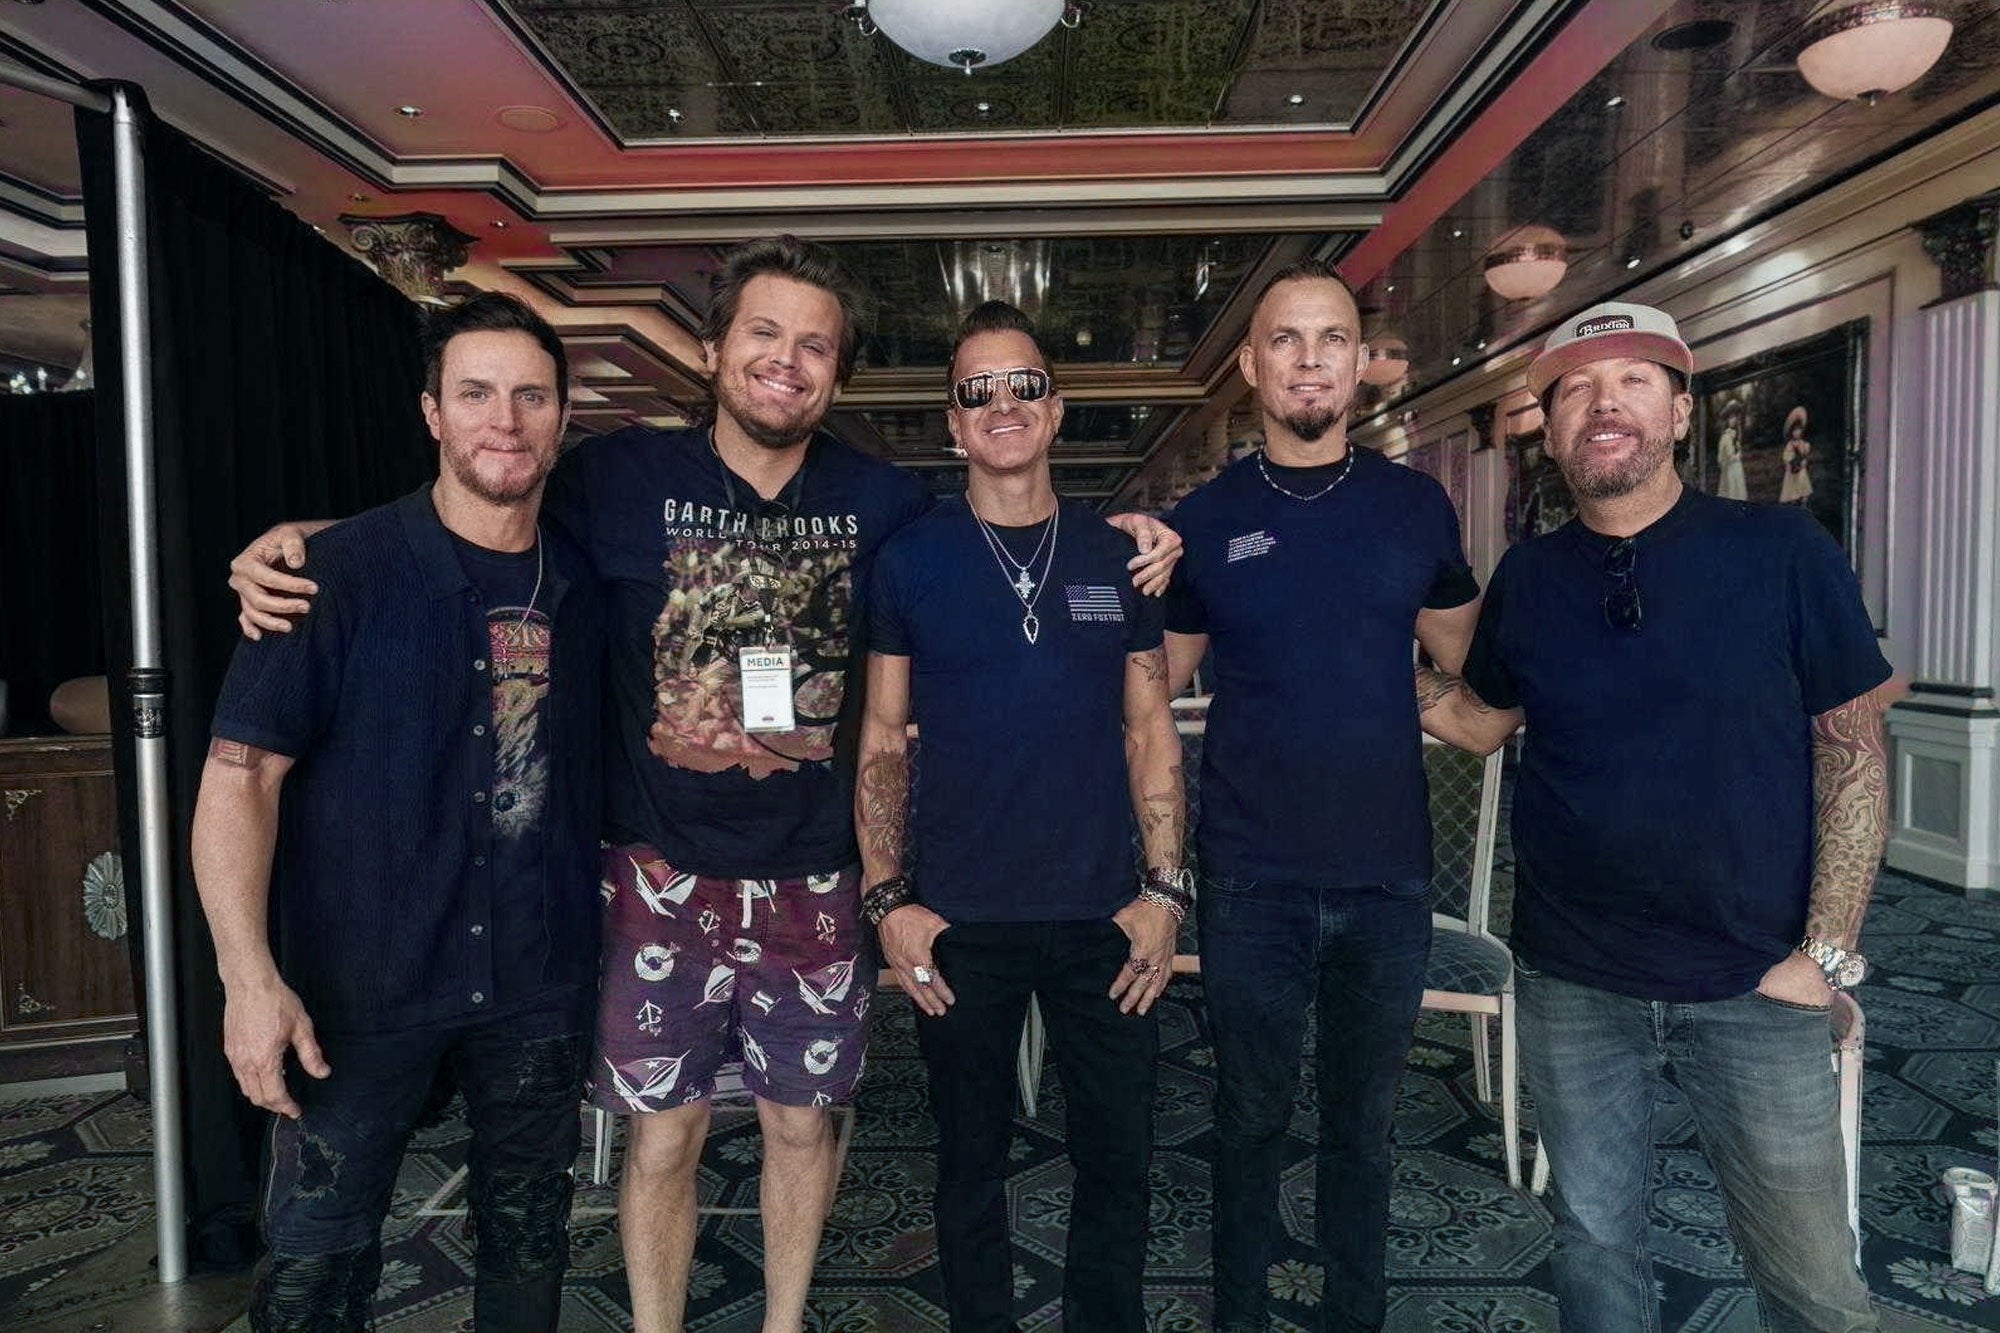 Band members pose with Luke, who wears a Garth Brooks T-shirt, in a cruise ship ballroom.